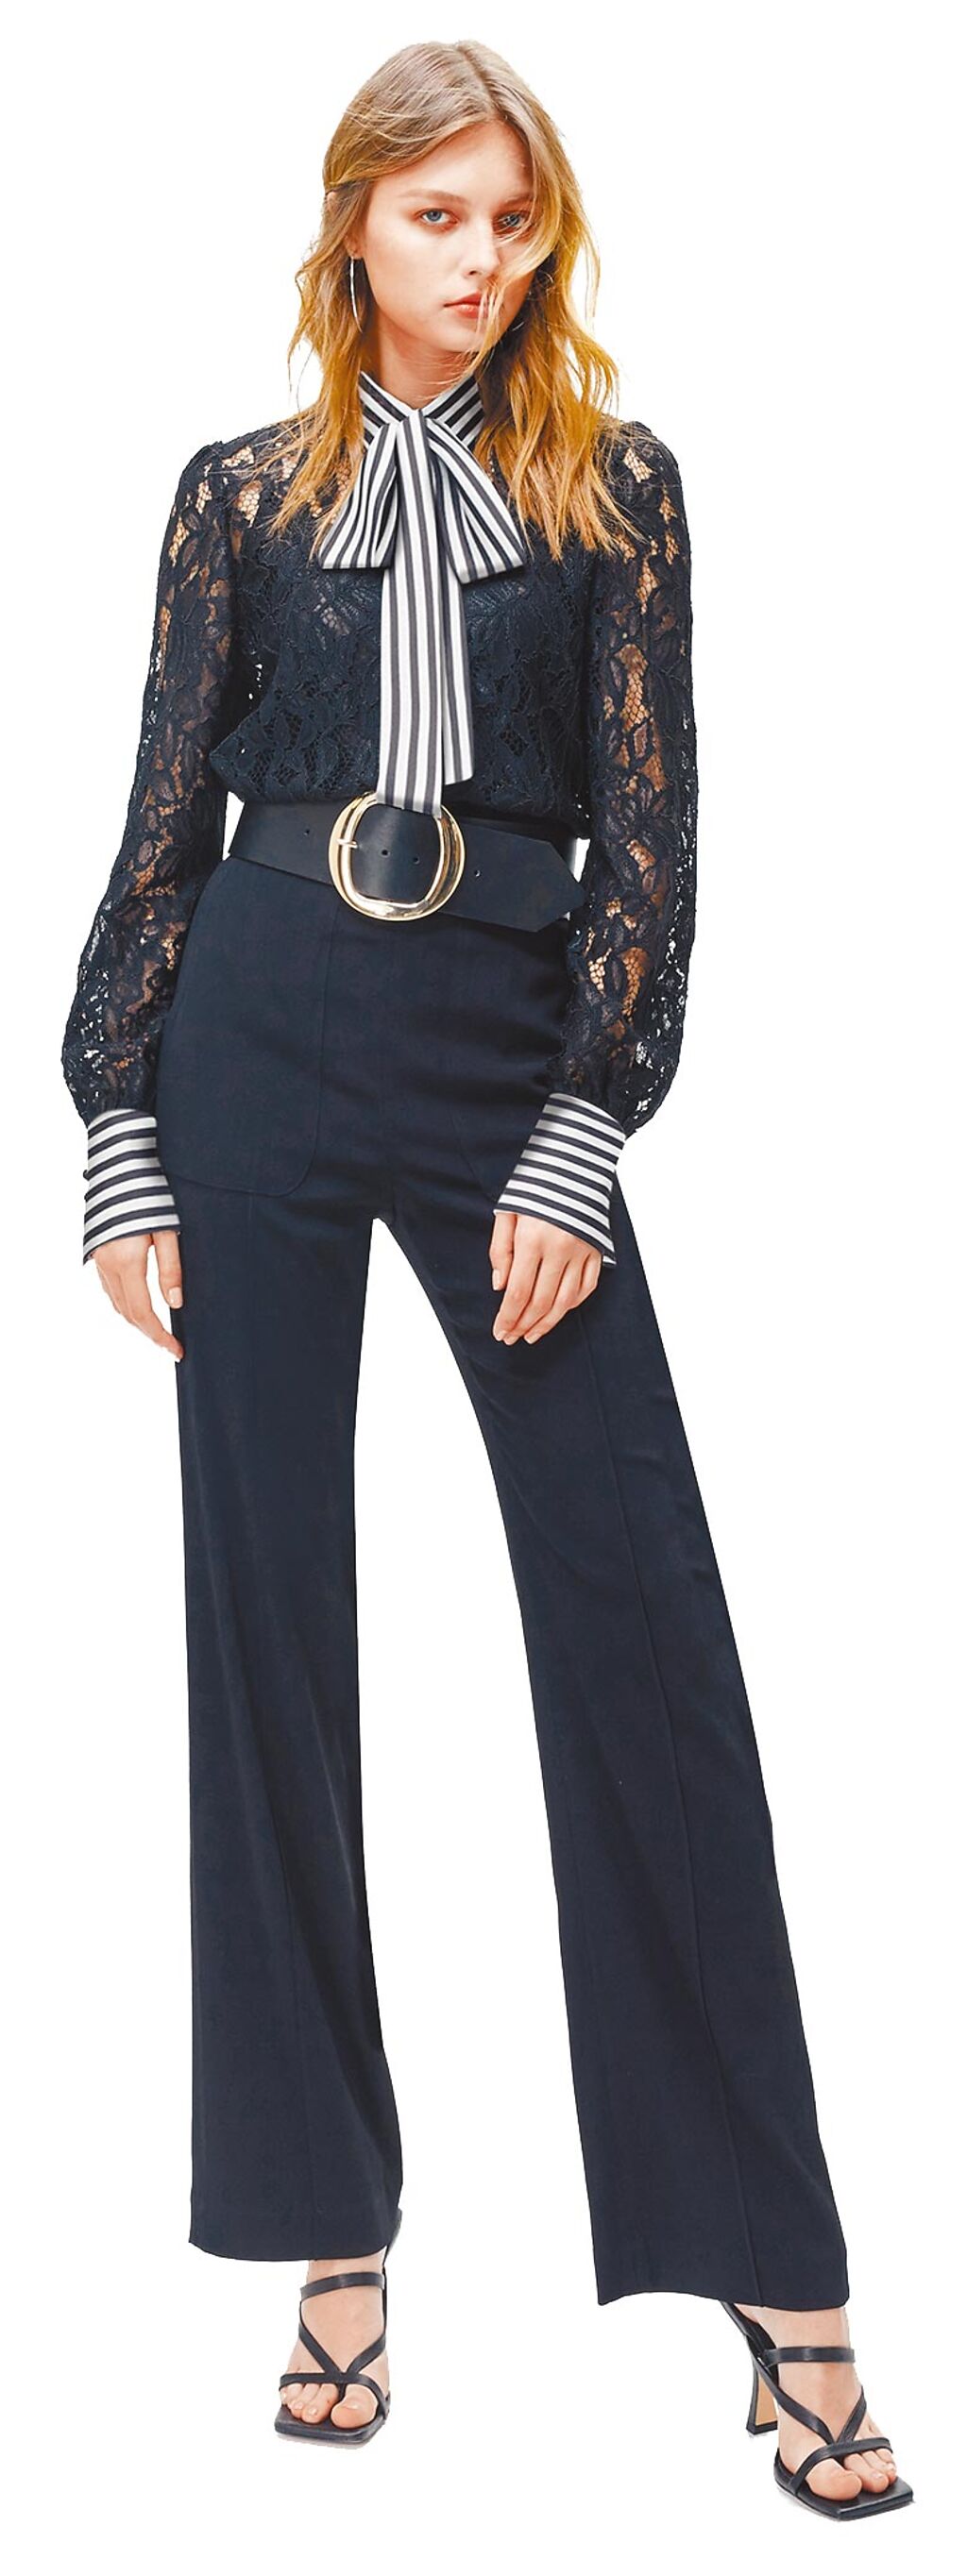 SOGO復興館KAO MEIFEN高美芬蕾絲上衣1萬4980元、經典套裝褲8980元。（SOGO提供）